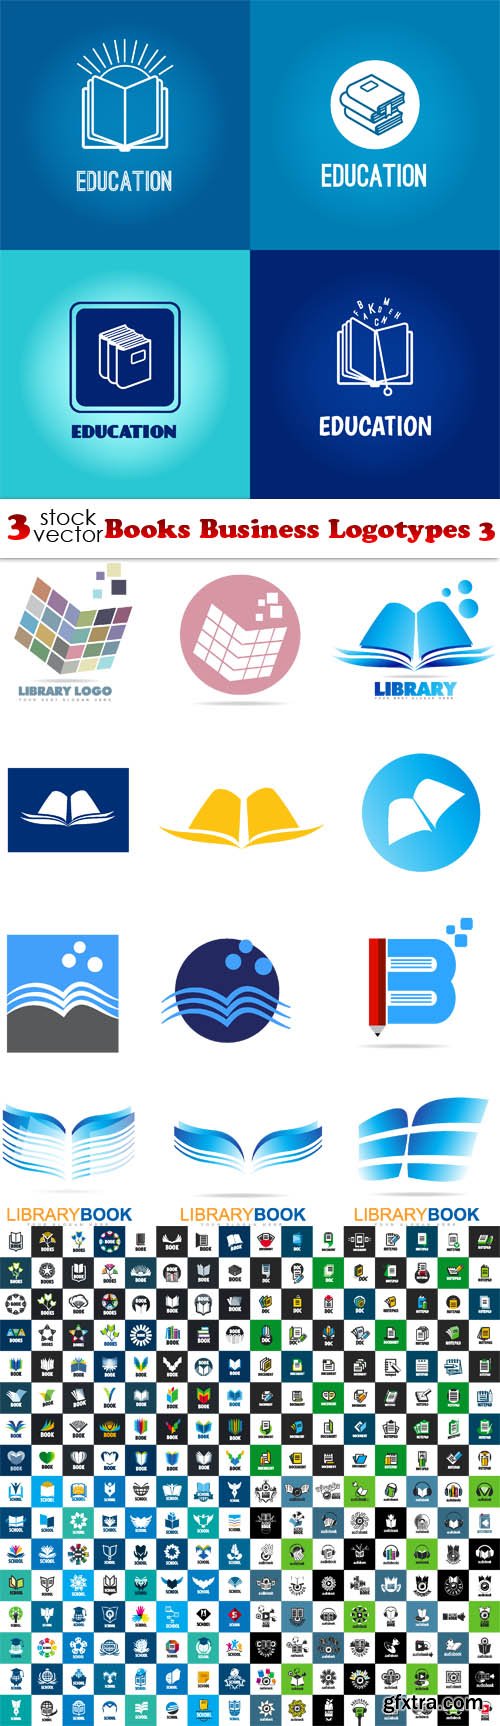 Vectors - Books Business Logotypes 3